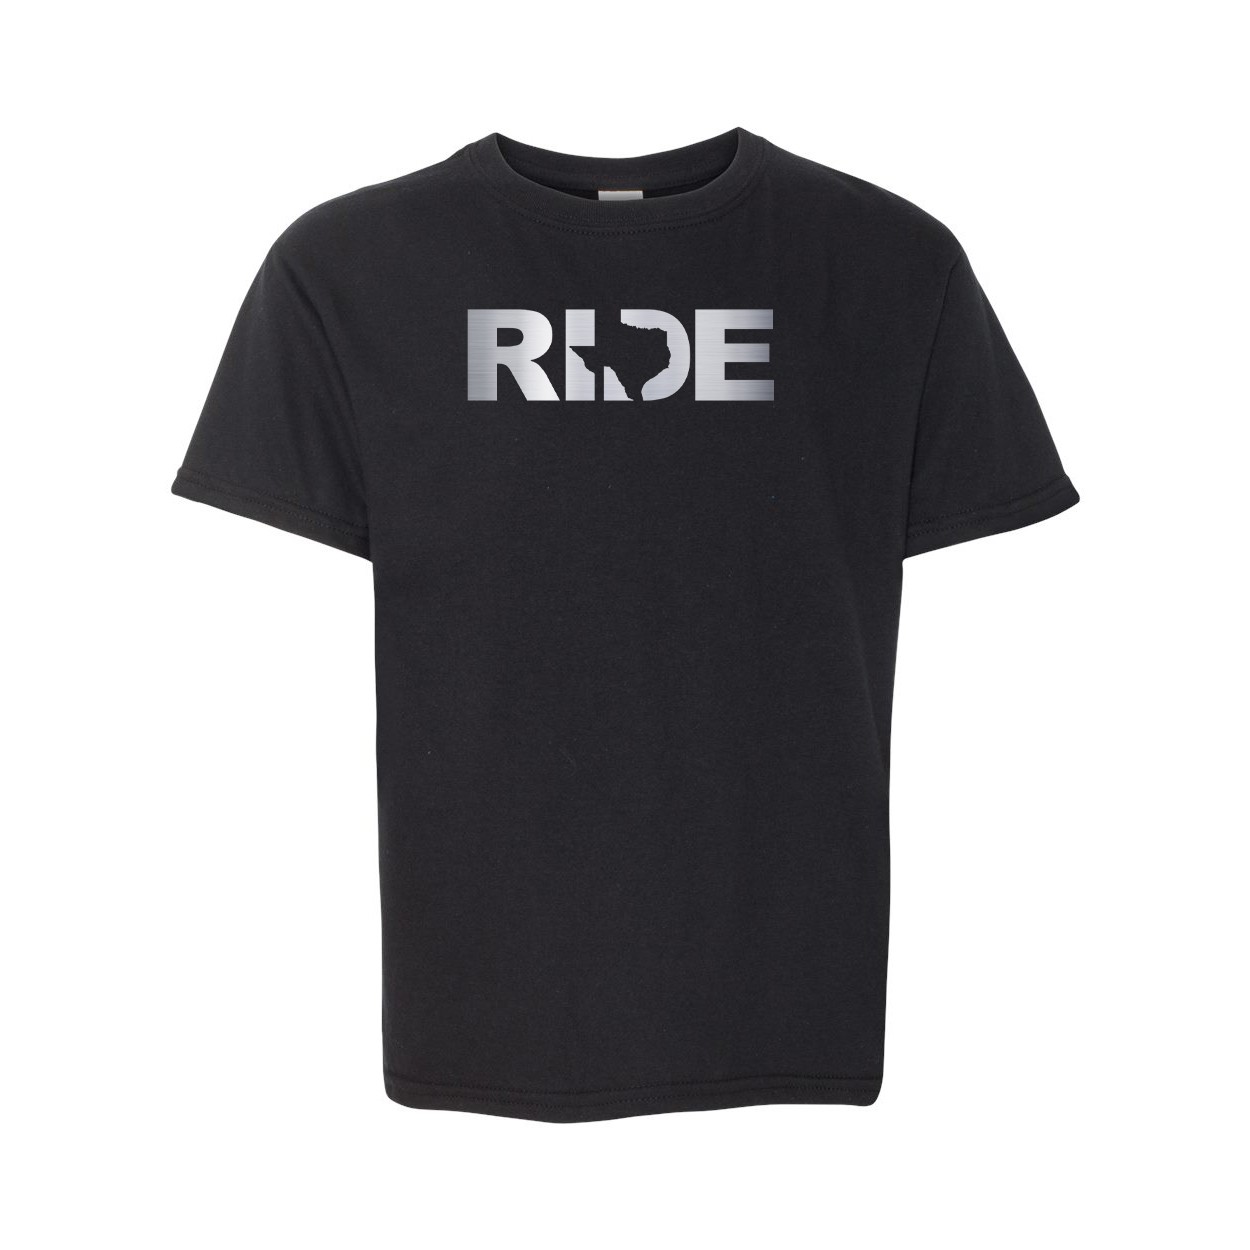 Ride Texas Classic Youth T-Shirt Black (Metallic Silver Logo)